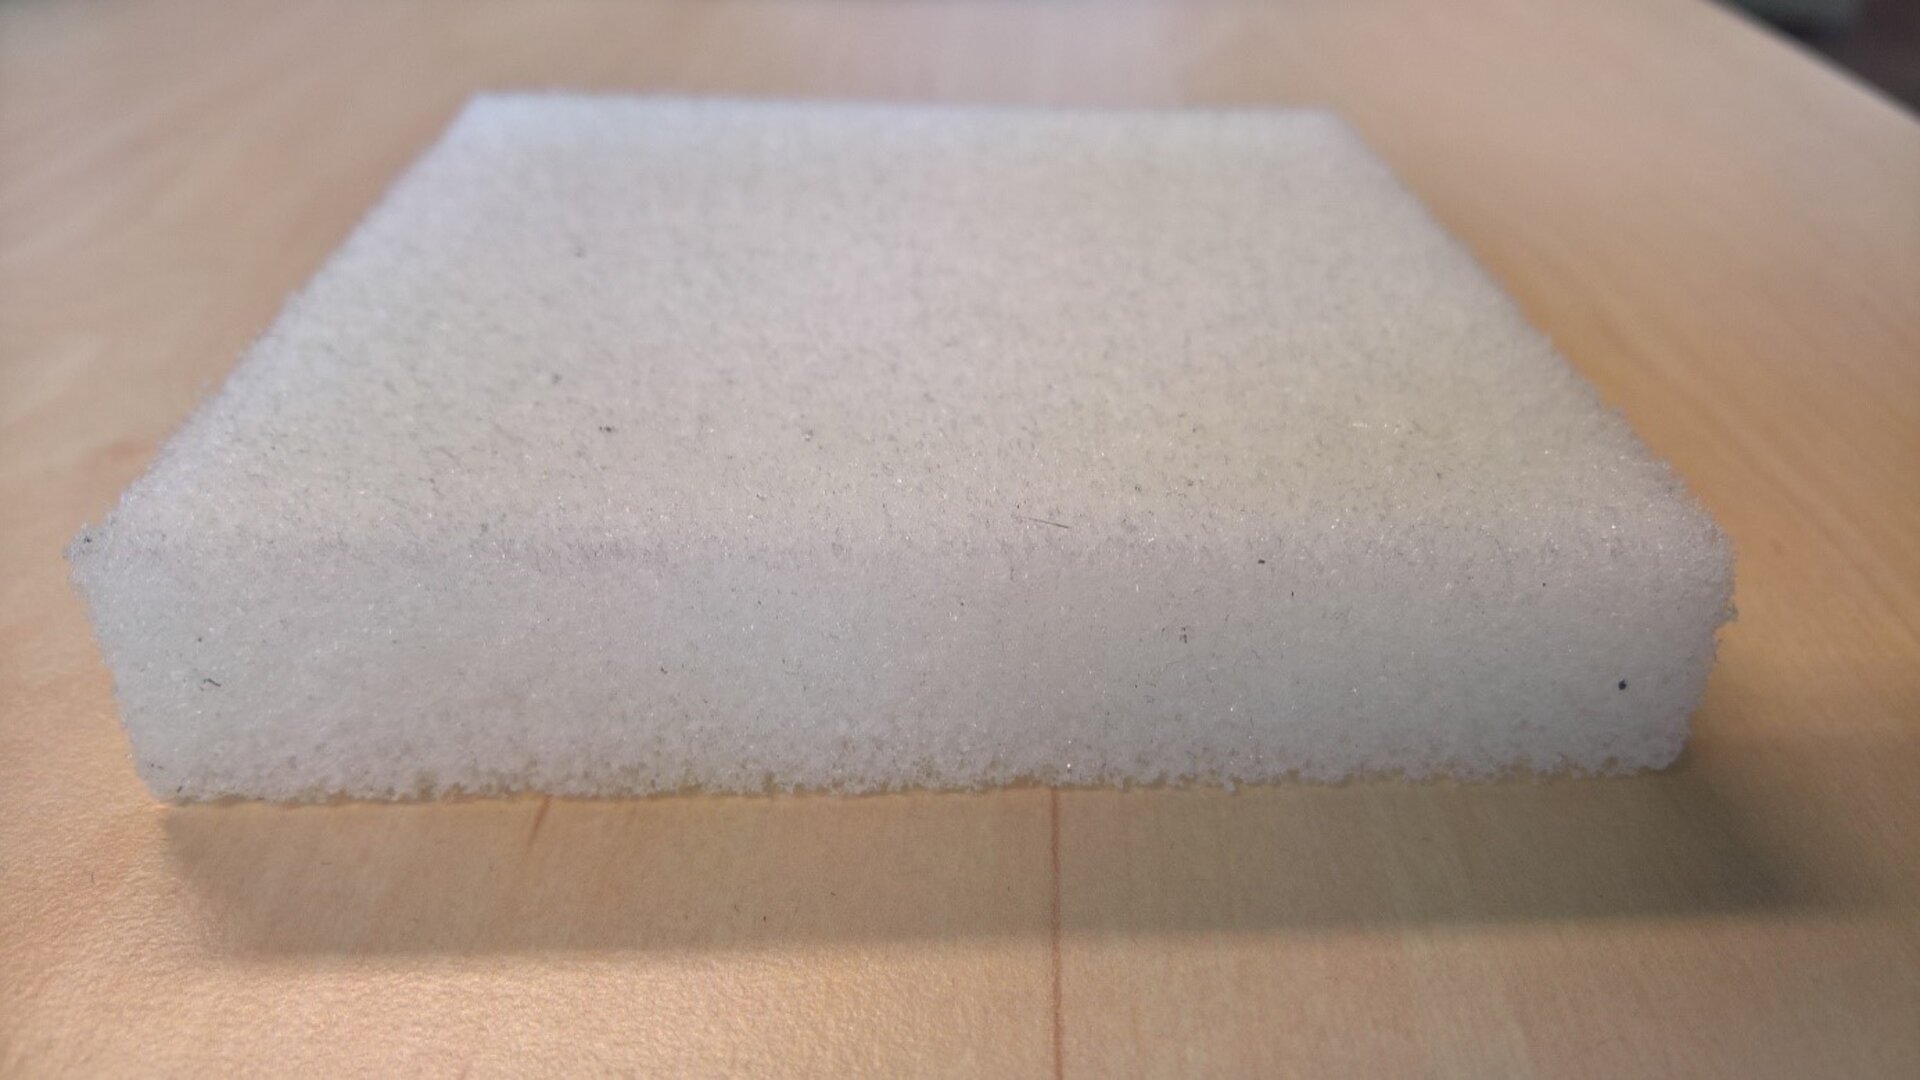 polyurethane foam mattress review